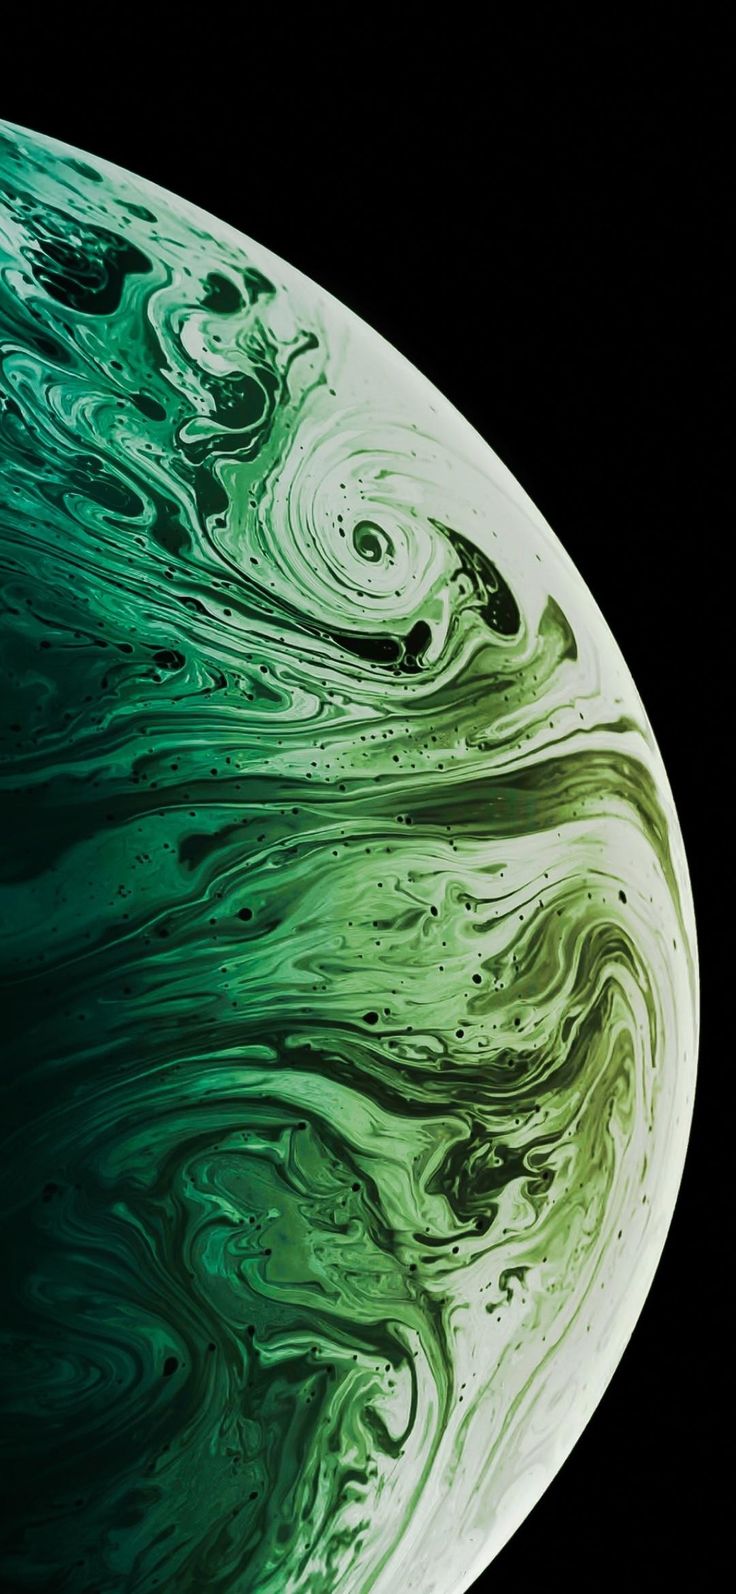 Green Planet. iPhone wallpaper green, iPhone wallpaper planets, Original iphone wallpaper